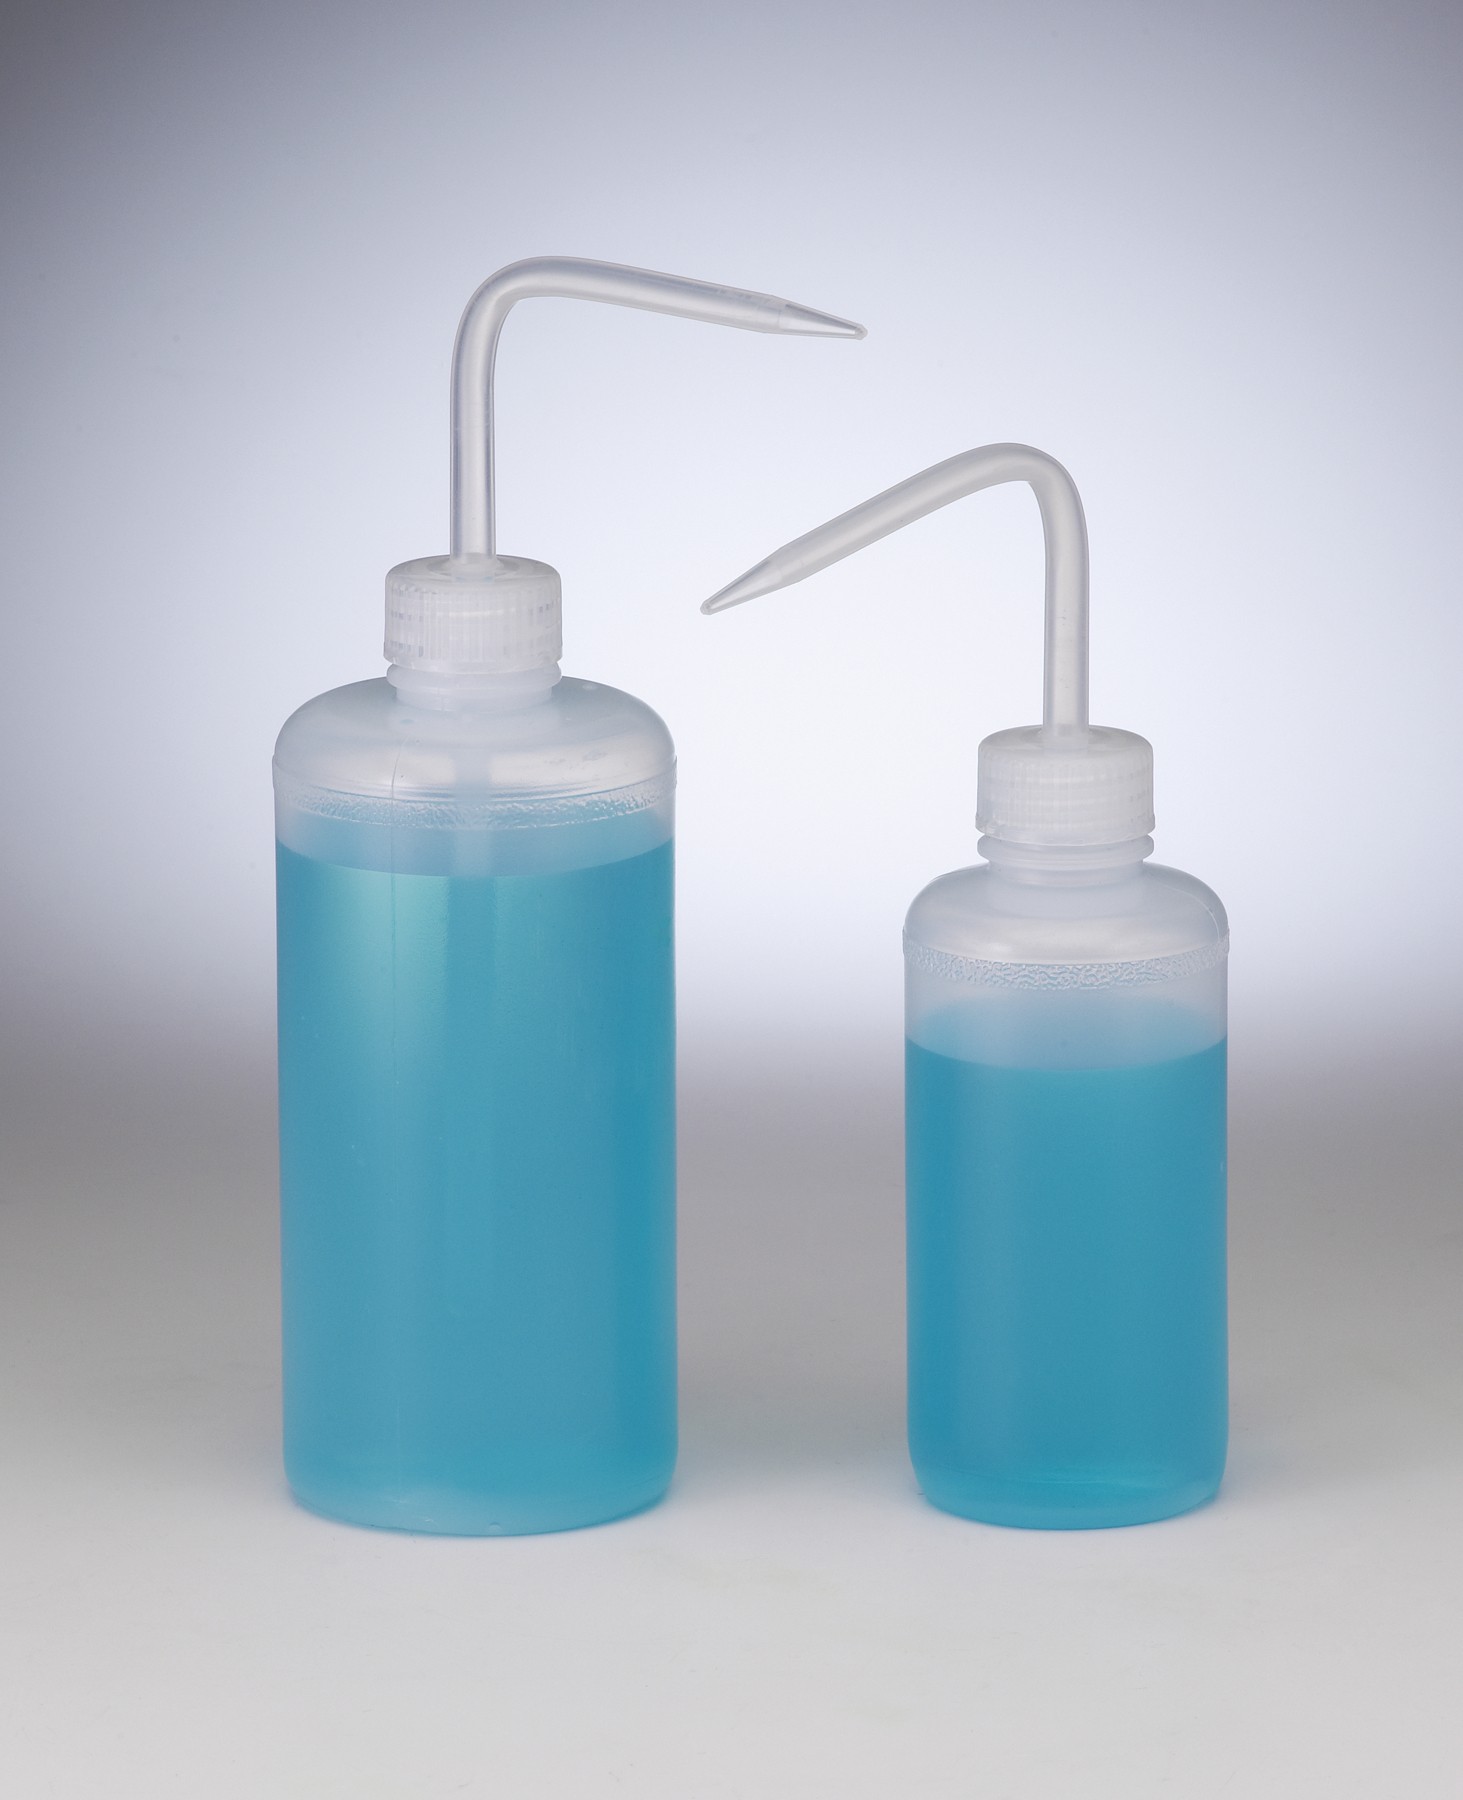 SP Bel-Art Needle Spray Narrow-Mouth 250ml (8oz) Polyethylene Wash Bottles; Polypropylene Cap, 28mm Closure (Pack of 12)